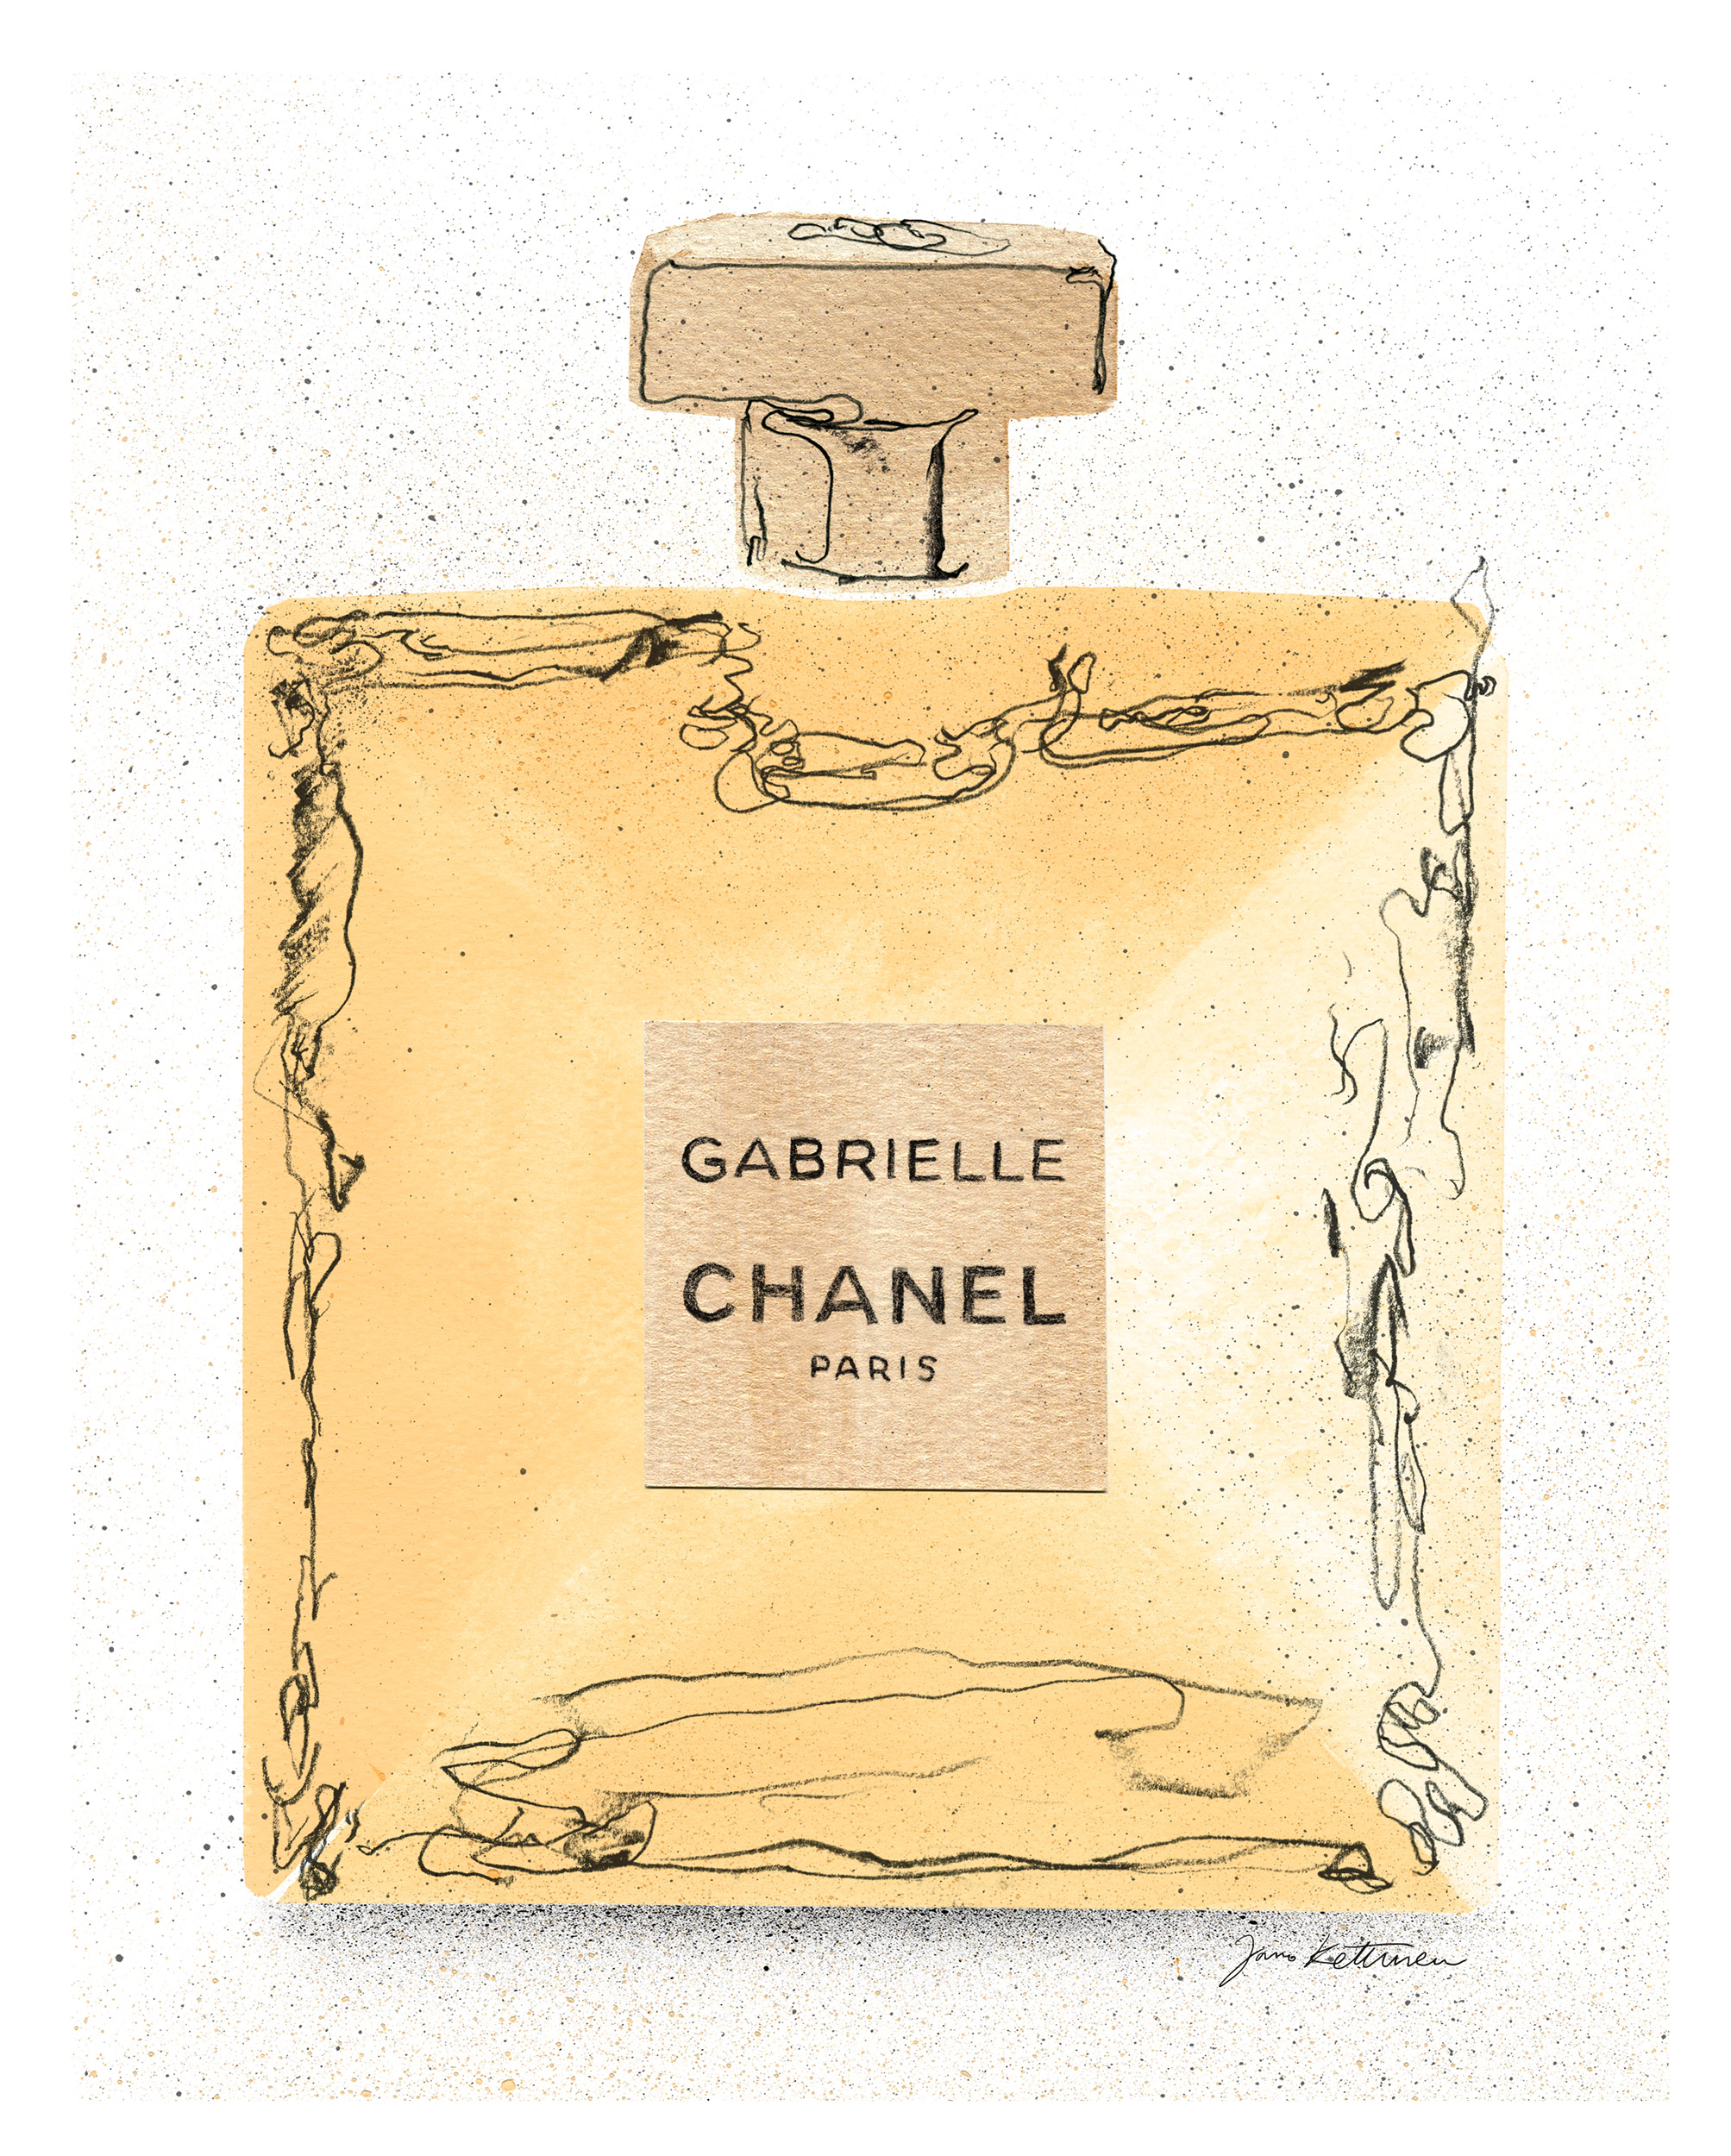 Gabrielle Chanel perfume bottle illustration